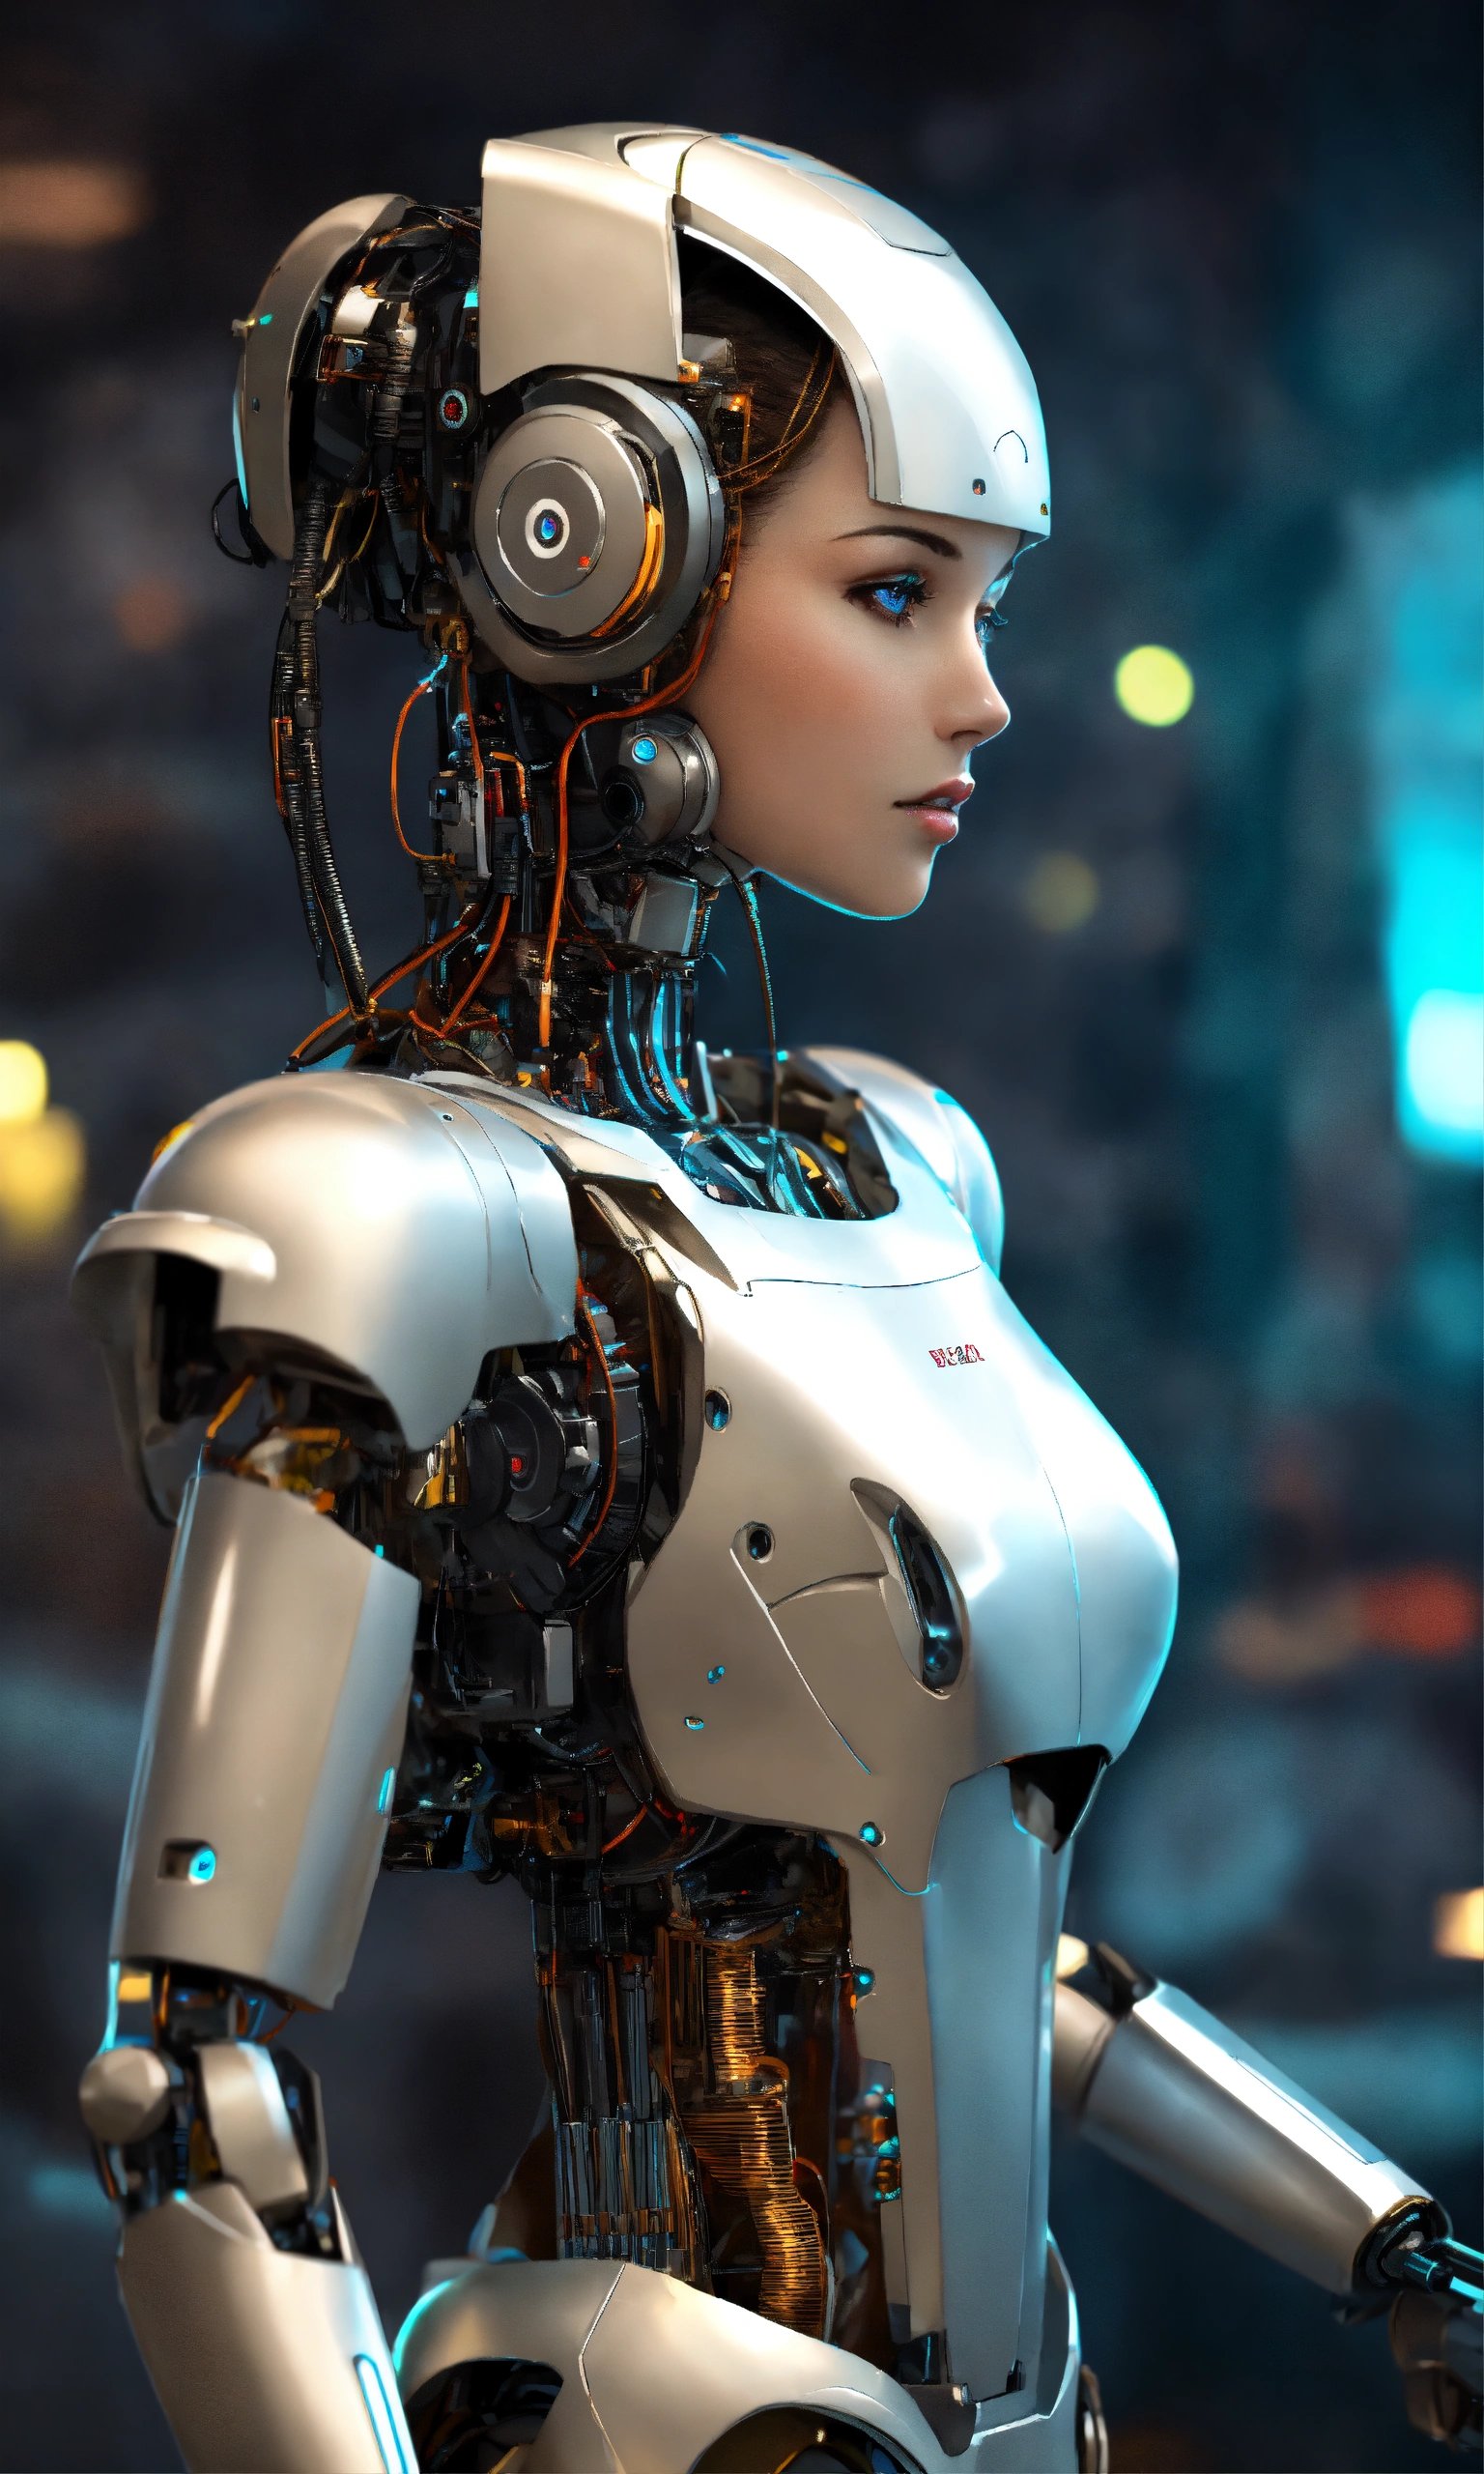 Robotic Transformer 2 (RT-2) - Vision, Language, and Action